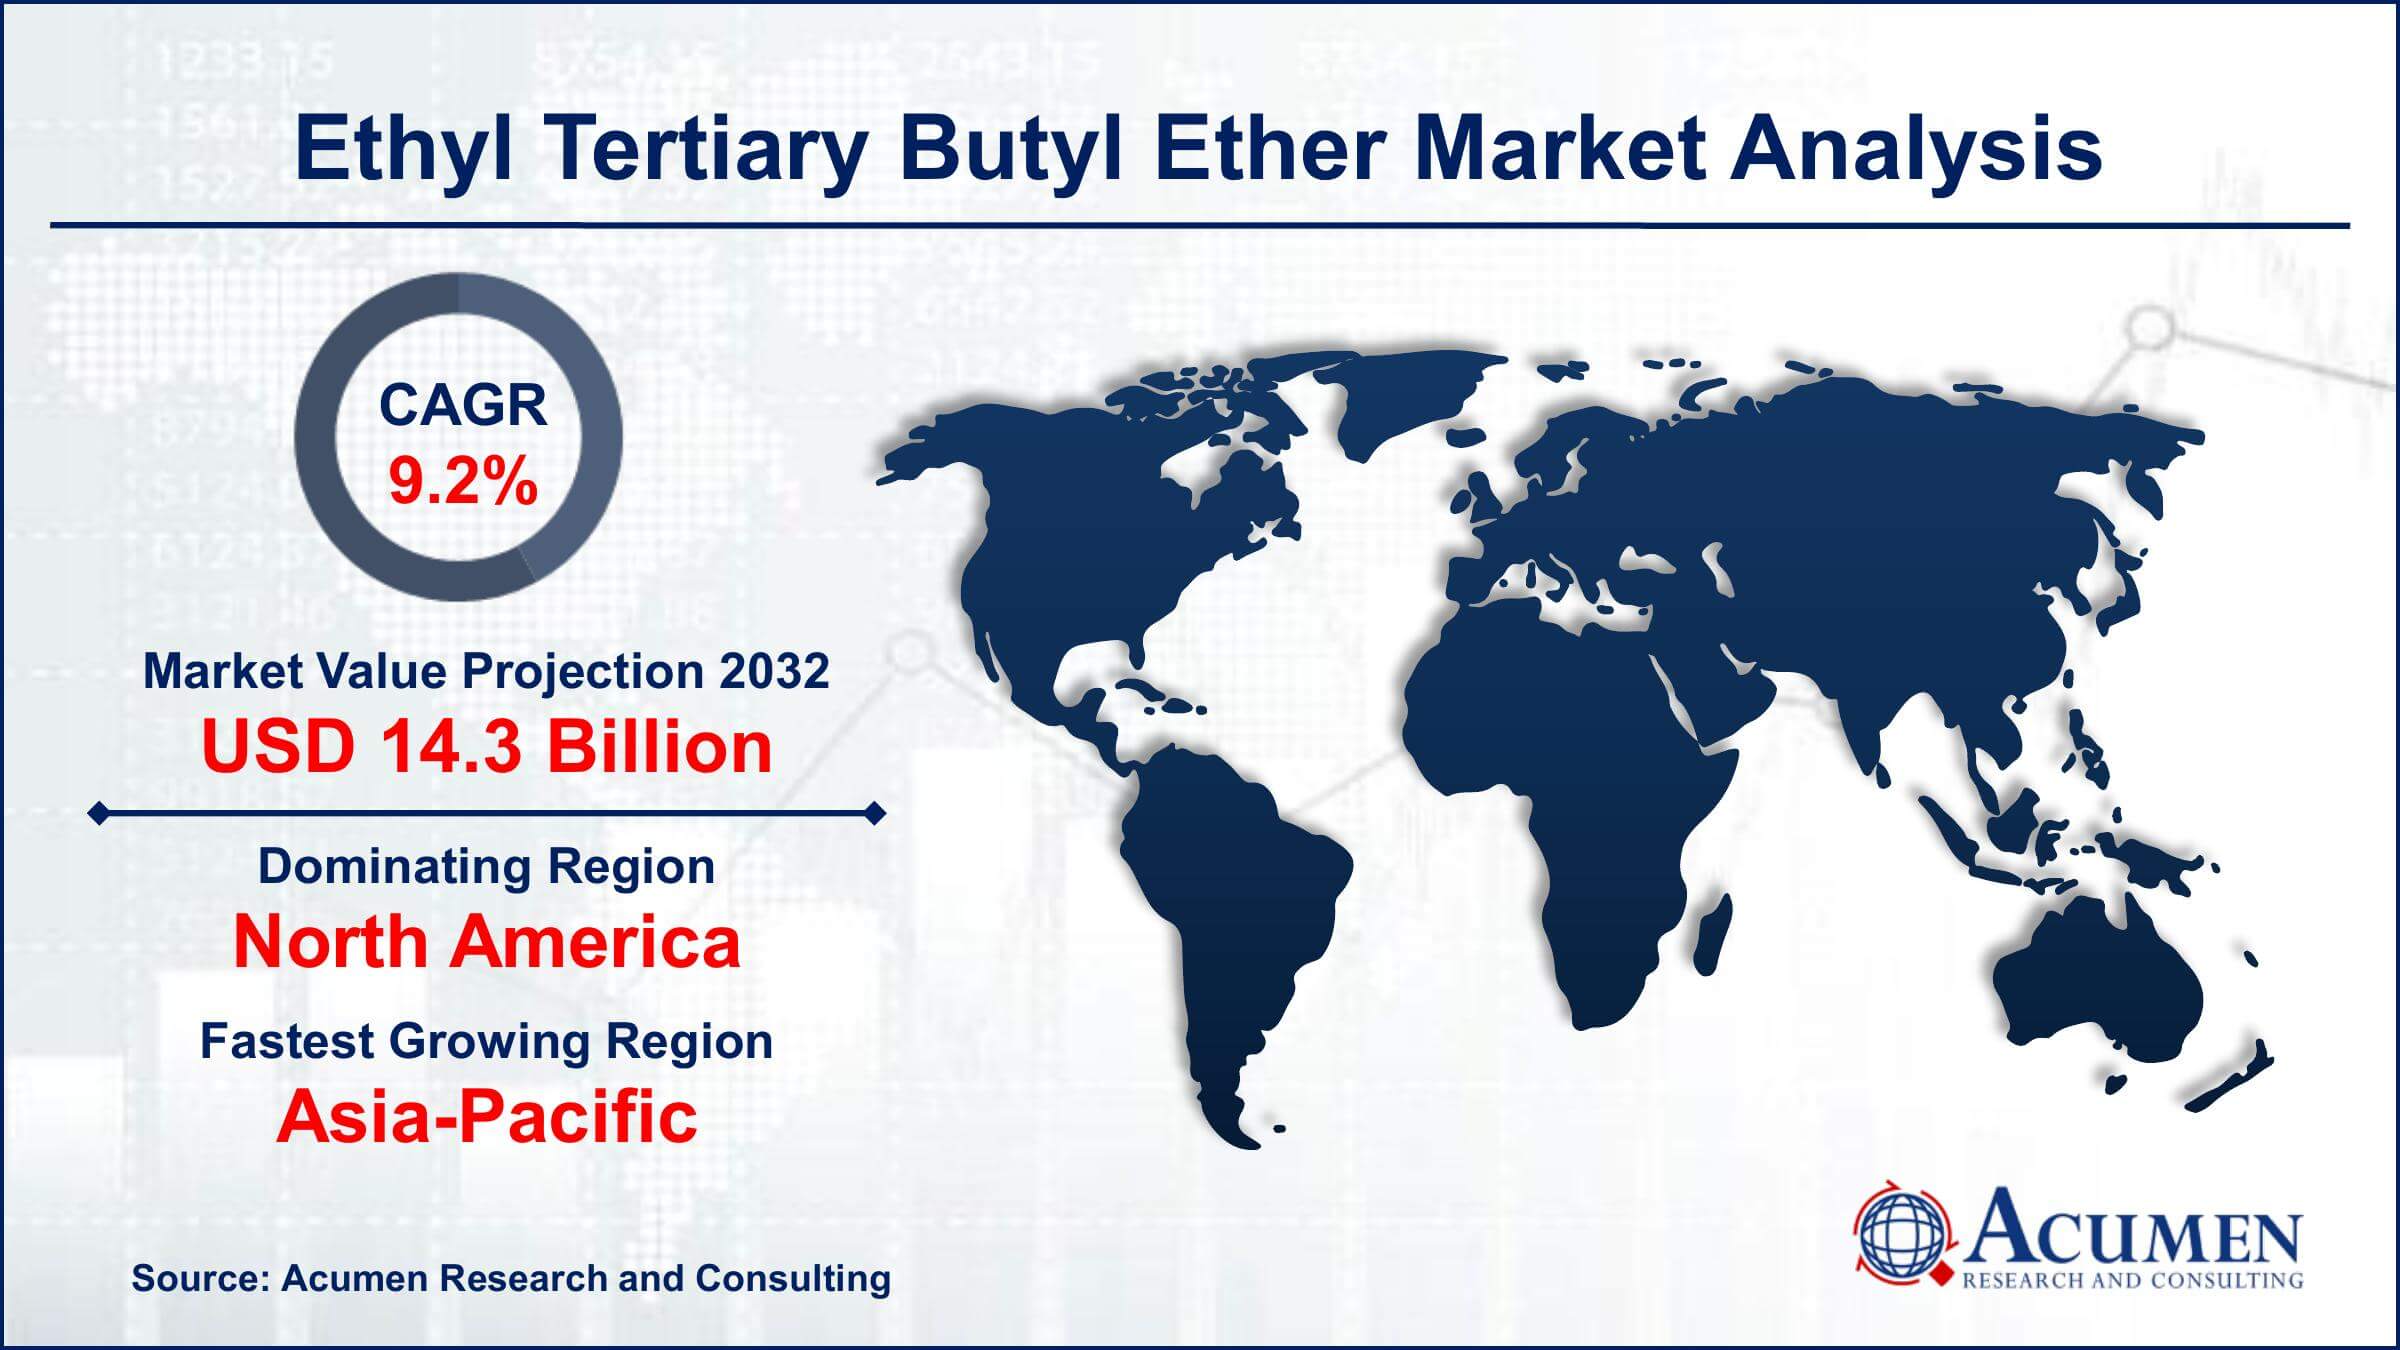 Global Ethyl Tertiary Butyl Ether Market Trends